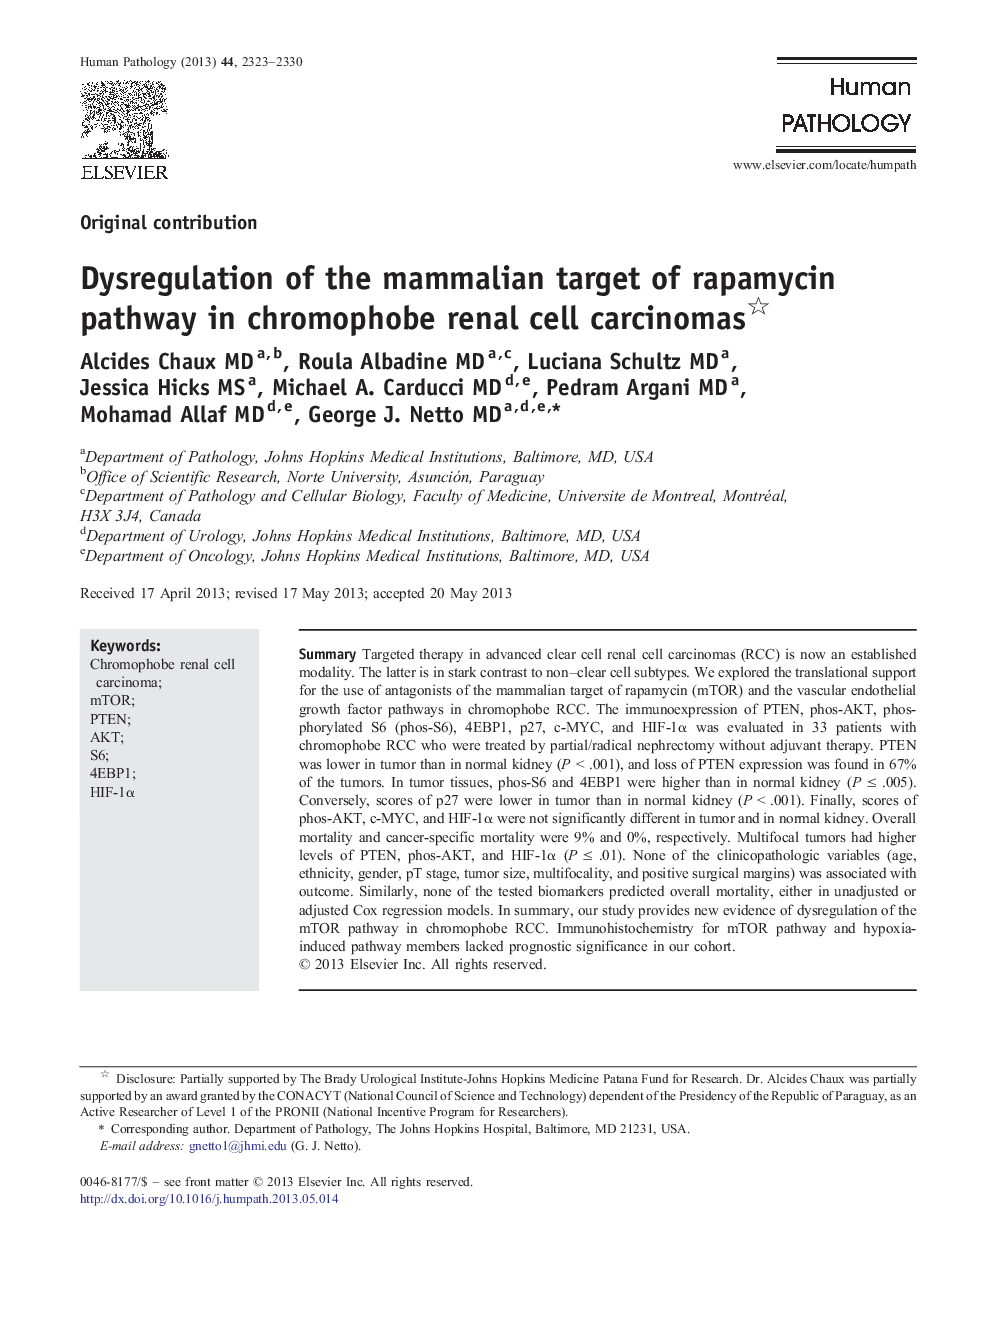 Dysregulation of the mammalian target of rapamycin pathway in chromophobe renal cell carcinomas 